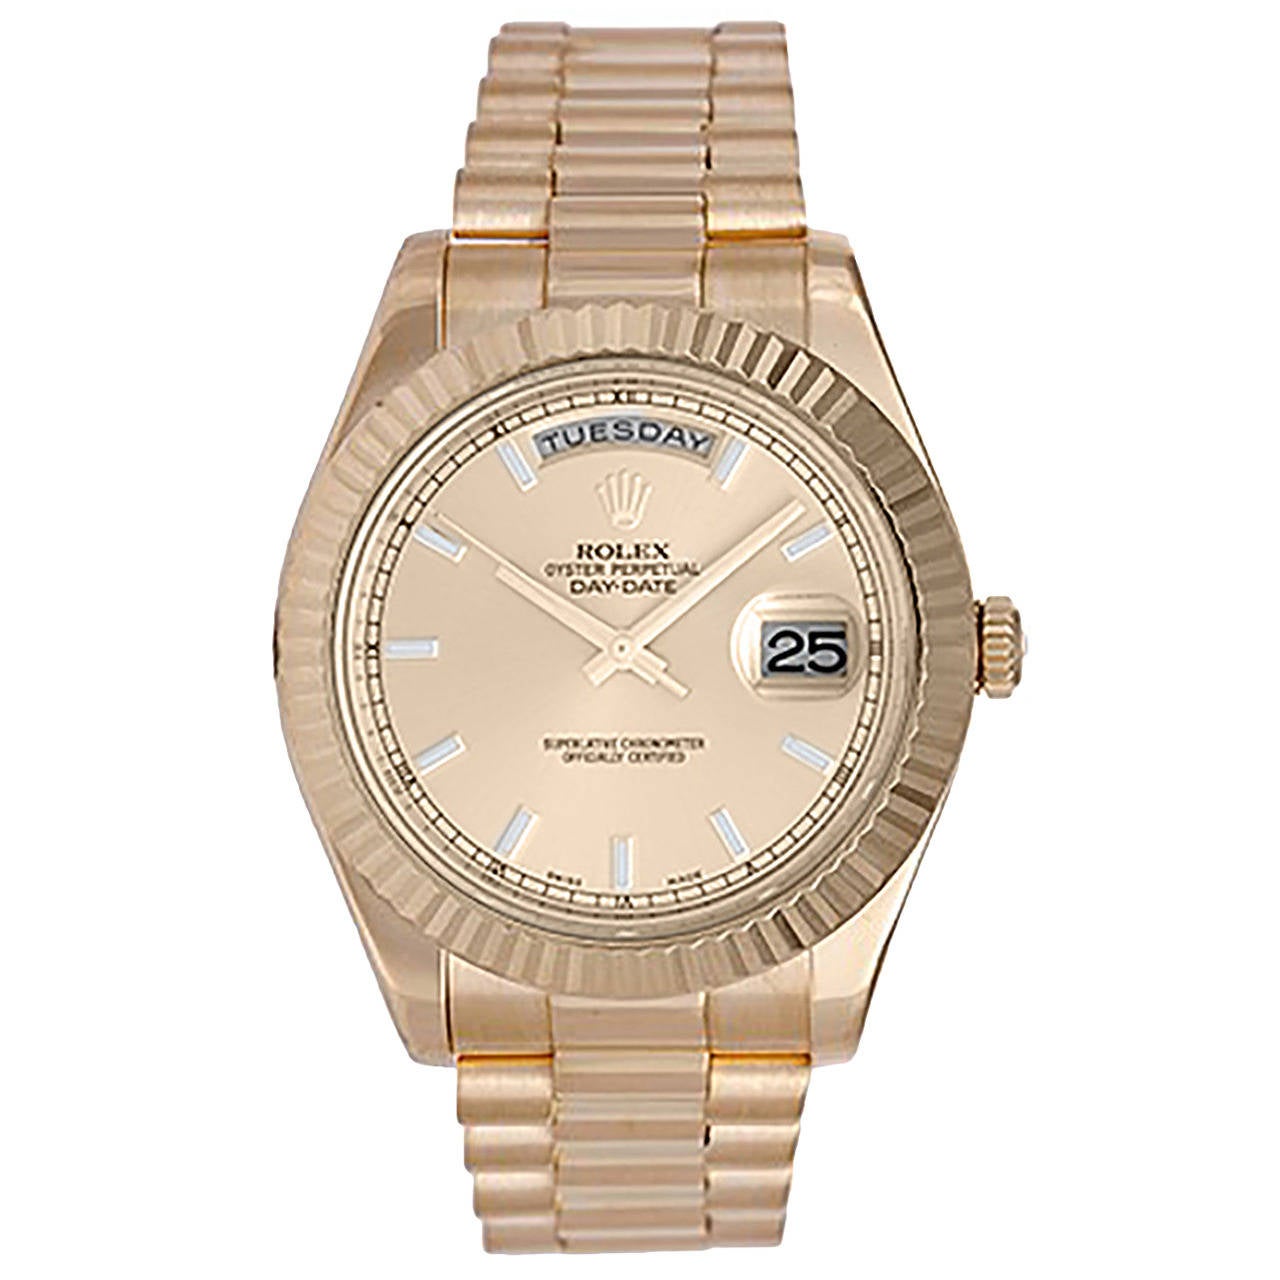 Rolex Yellow Gold Day-Date II President Automatic Wristwatch Ref 218238